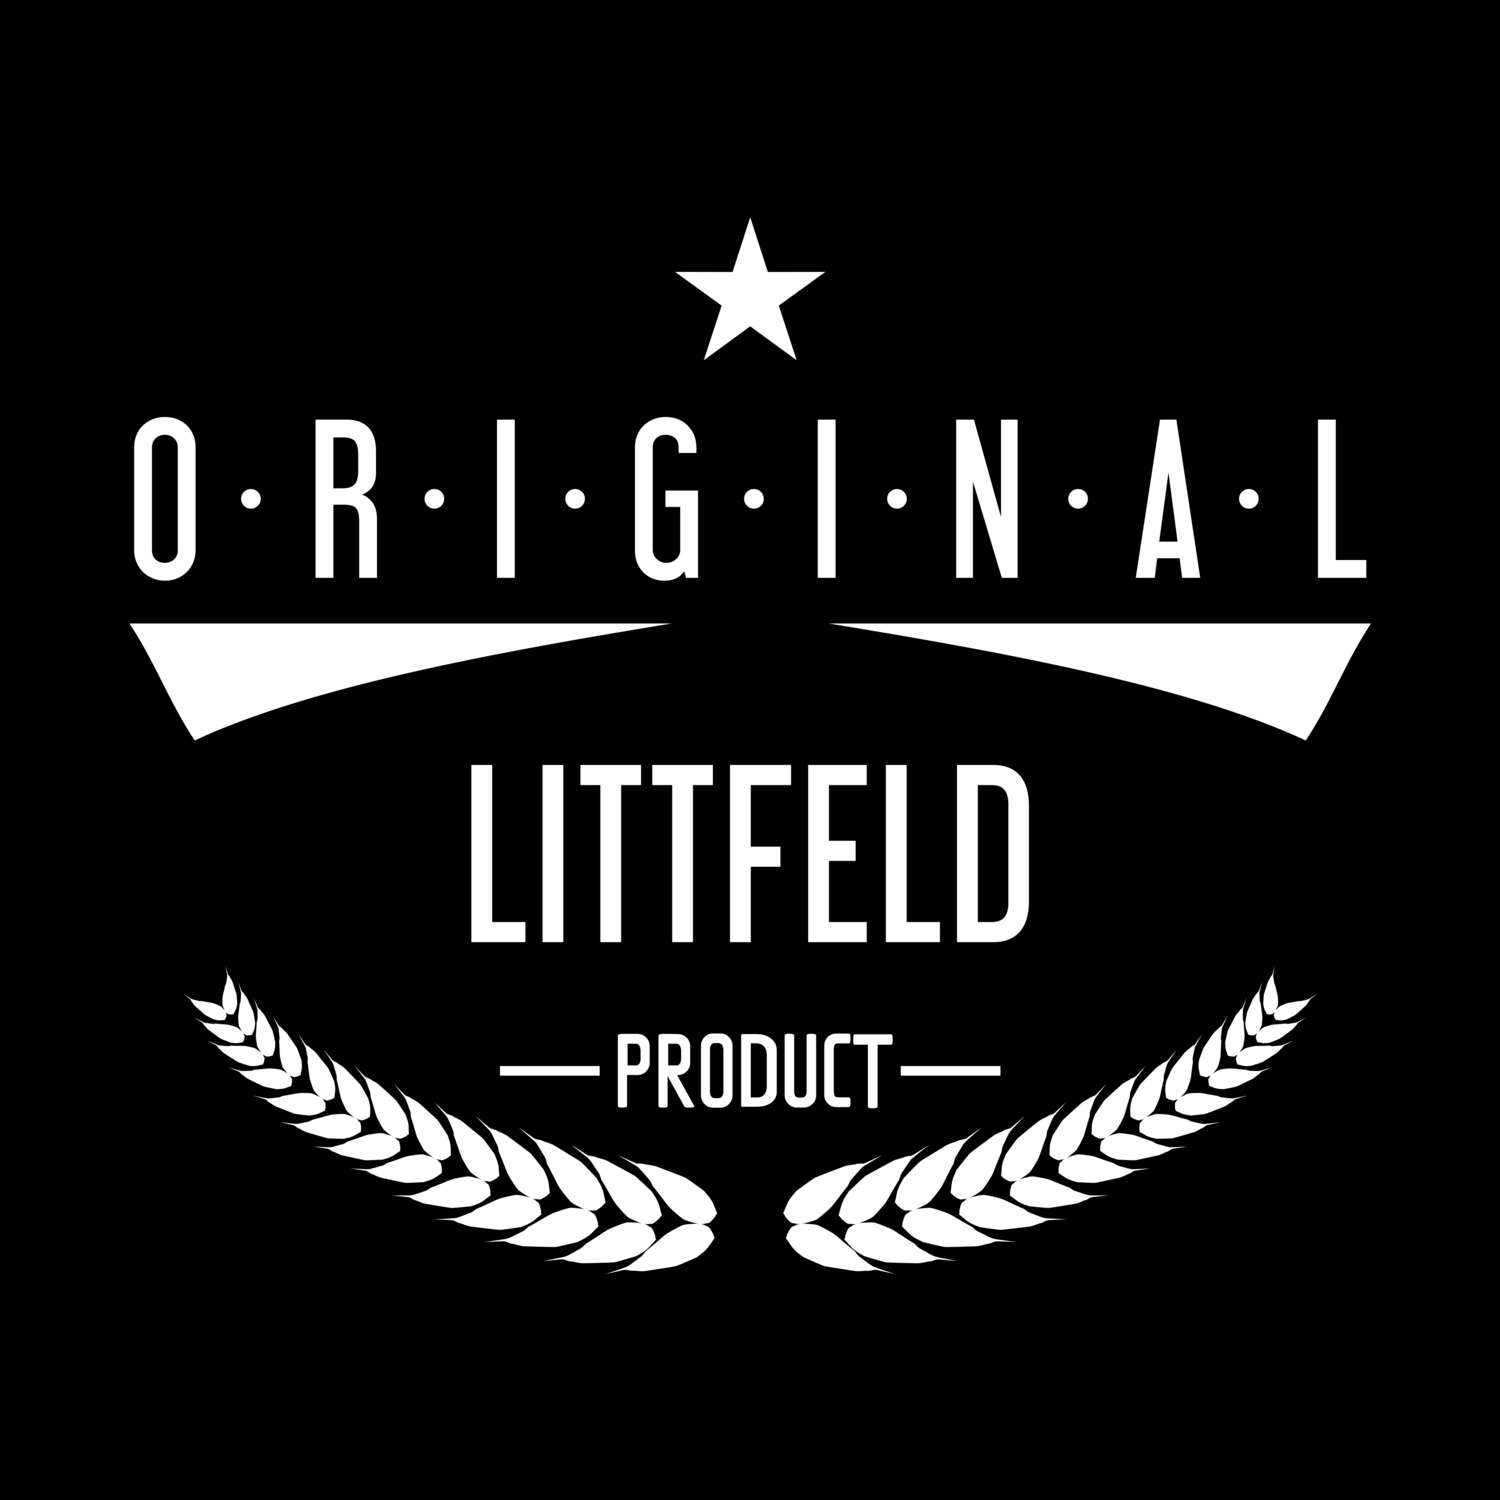 Littfeld T-Shirt »Original Product«